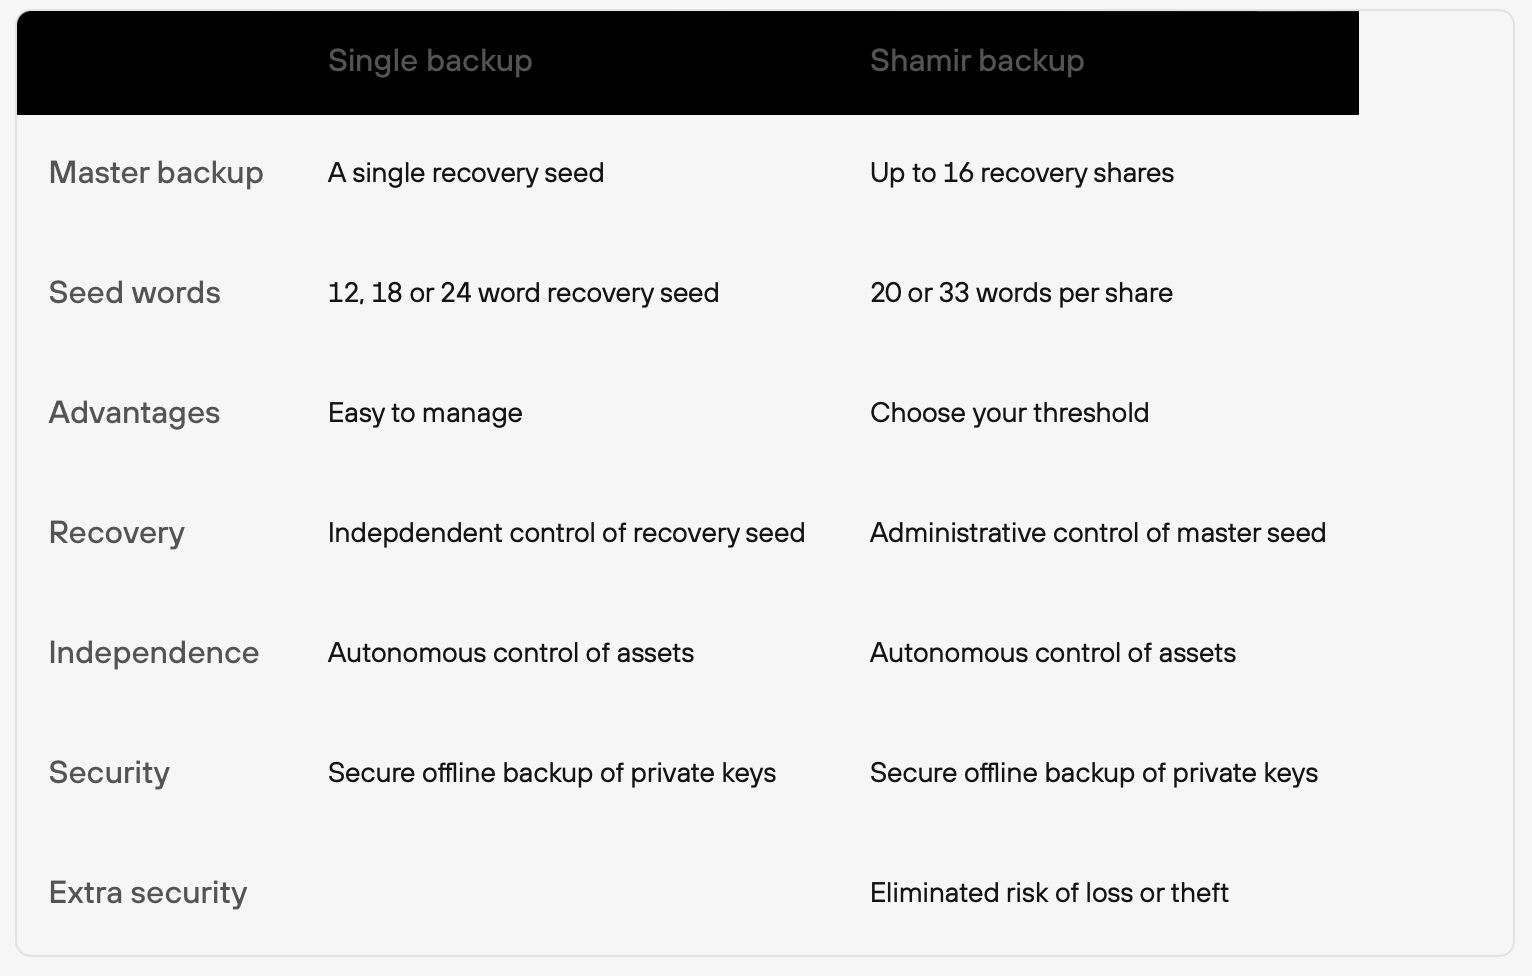 Differences between single backup and Shamir backup.